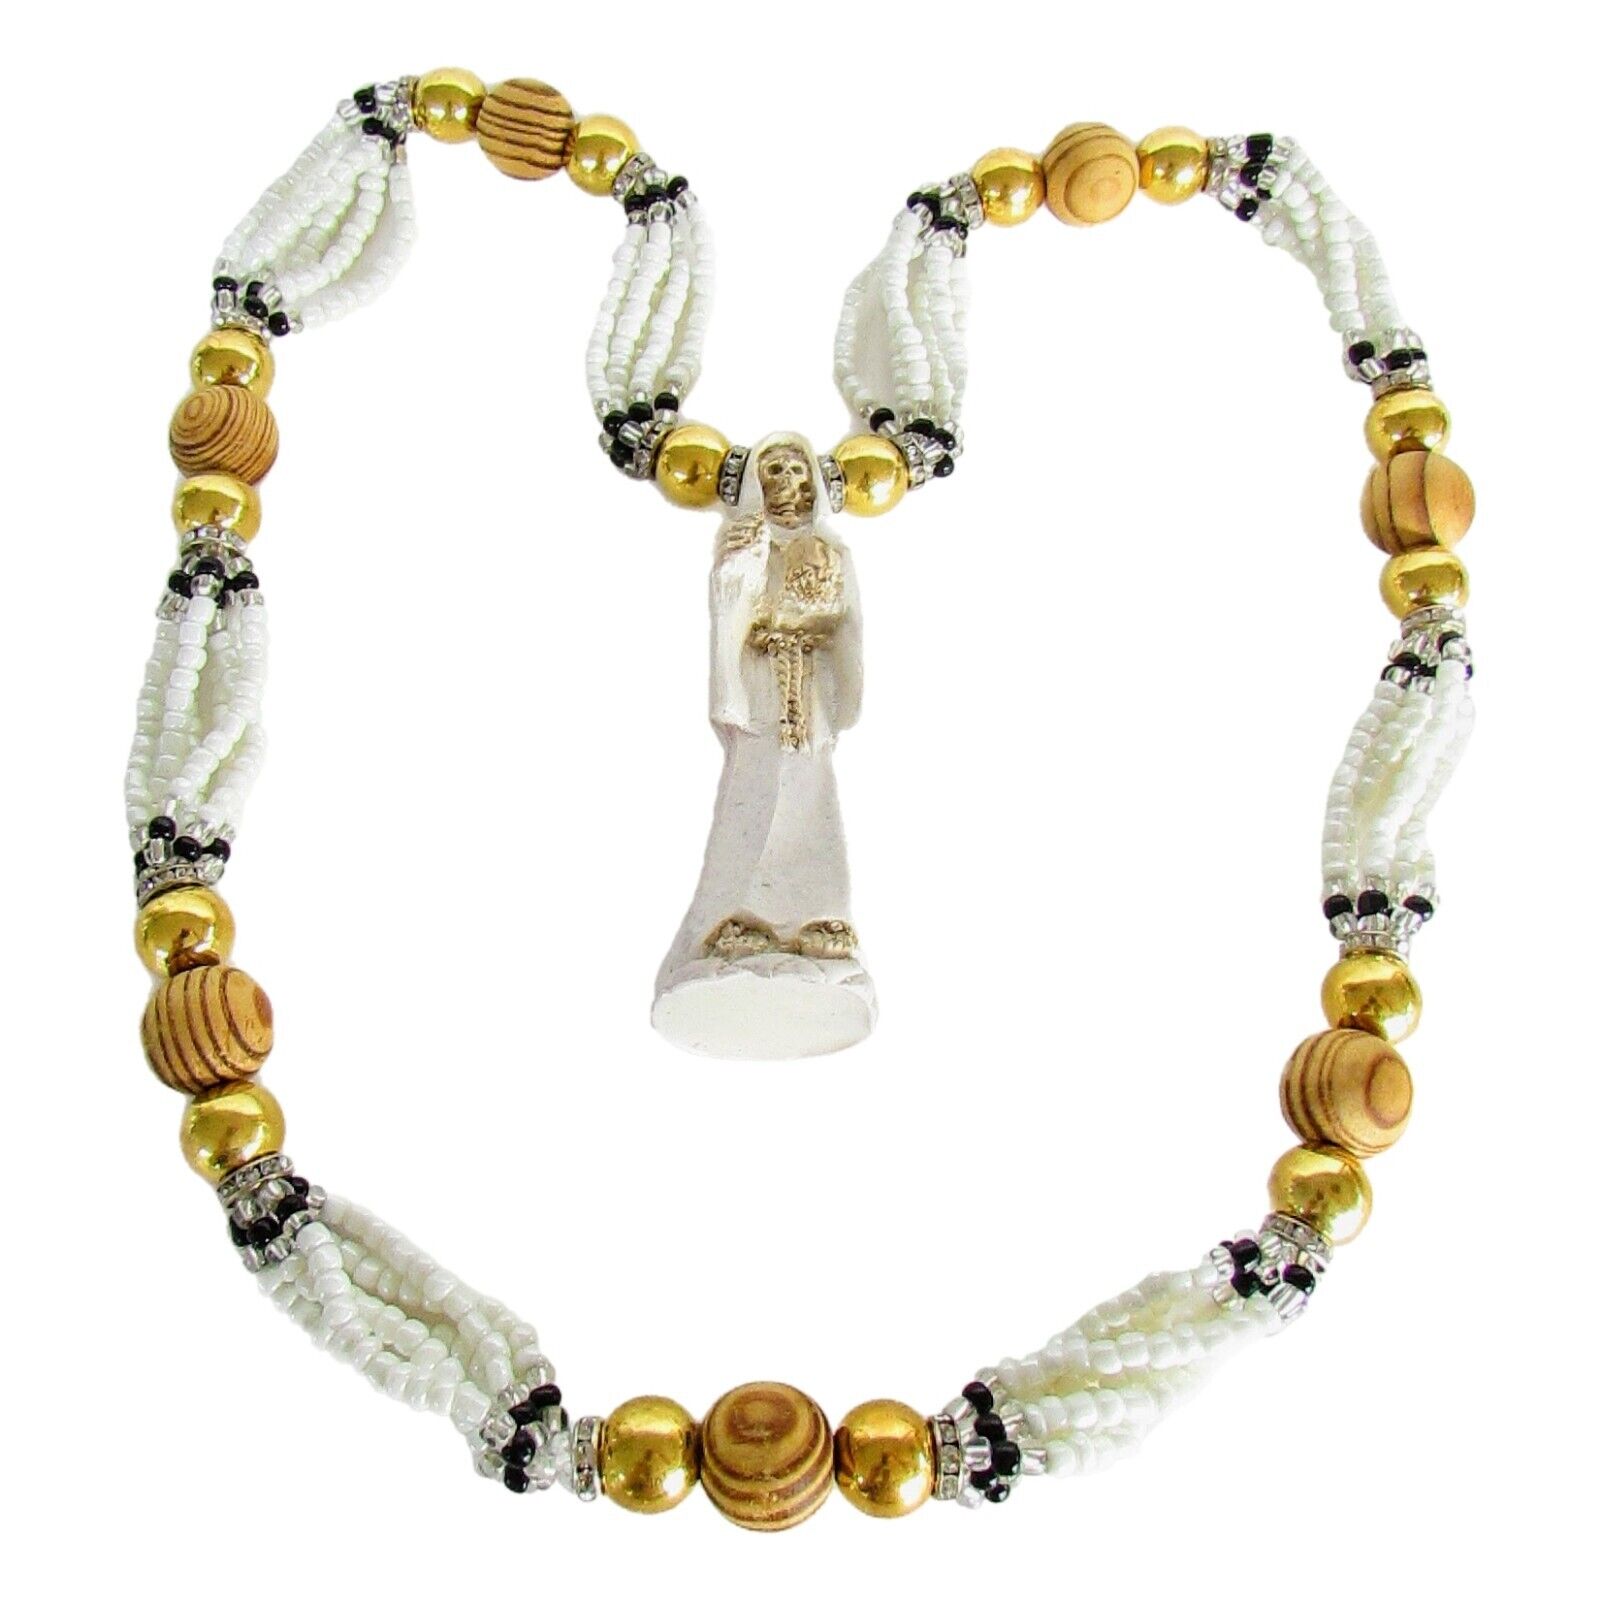 Santa Muerte Blanca Collar 6 Hilo Madera / Holy Death 6 String Statue Necklace